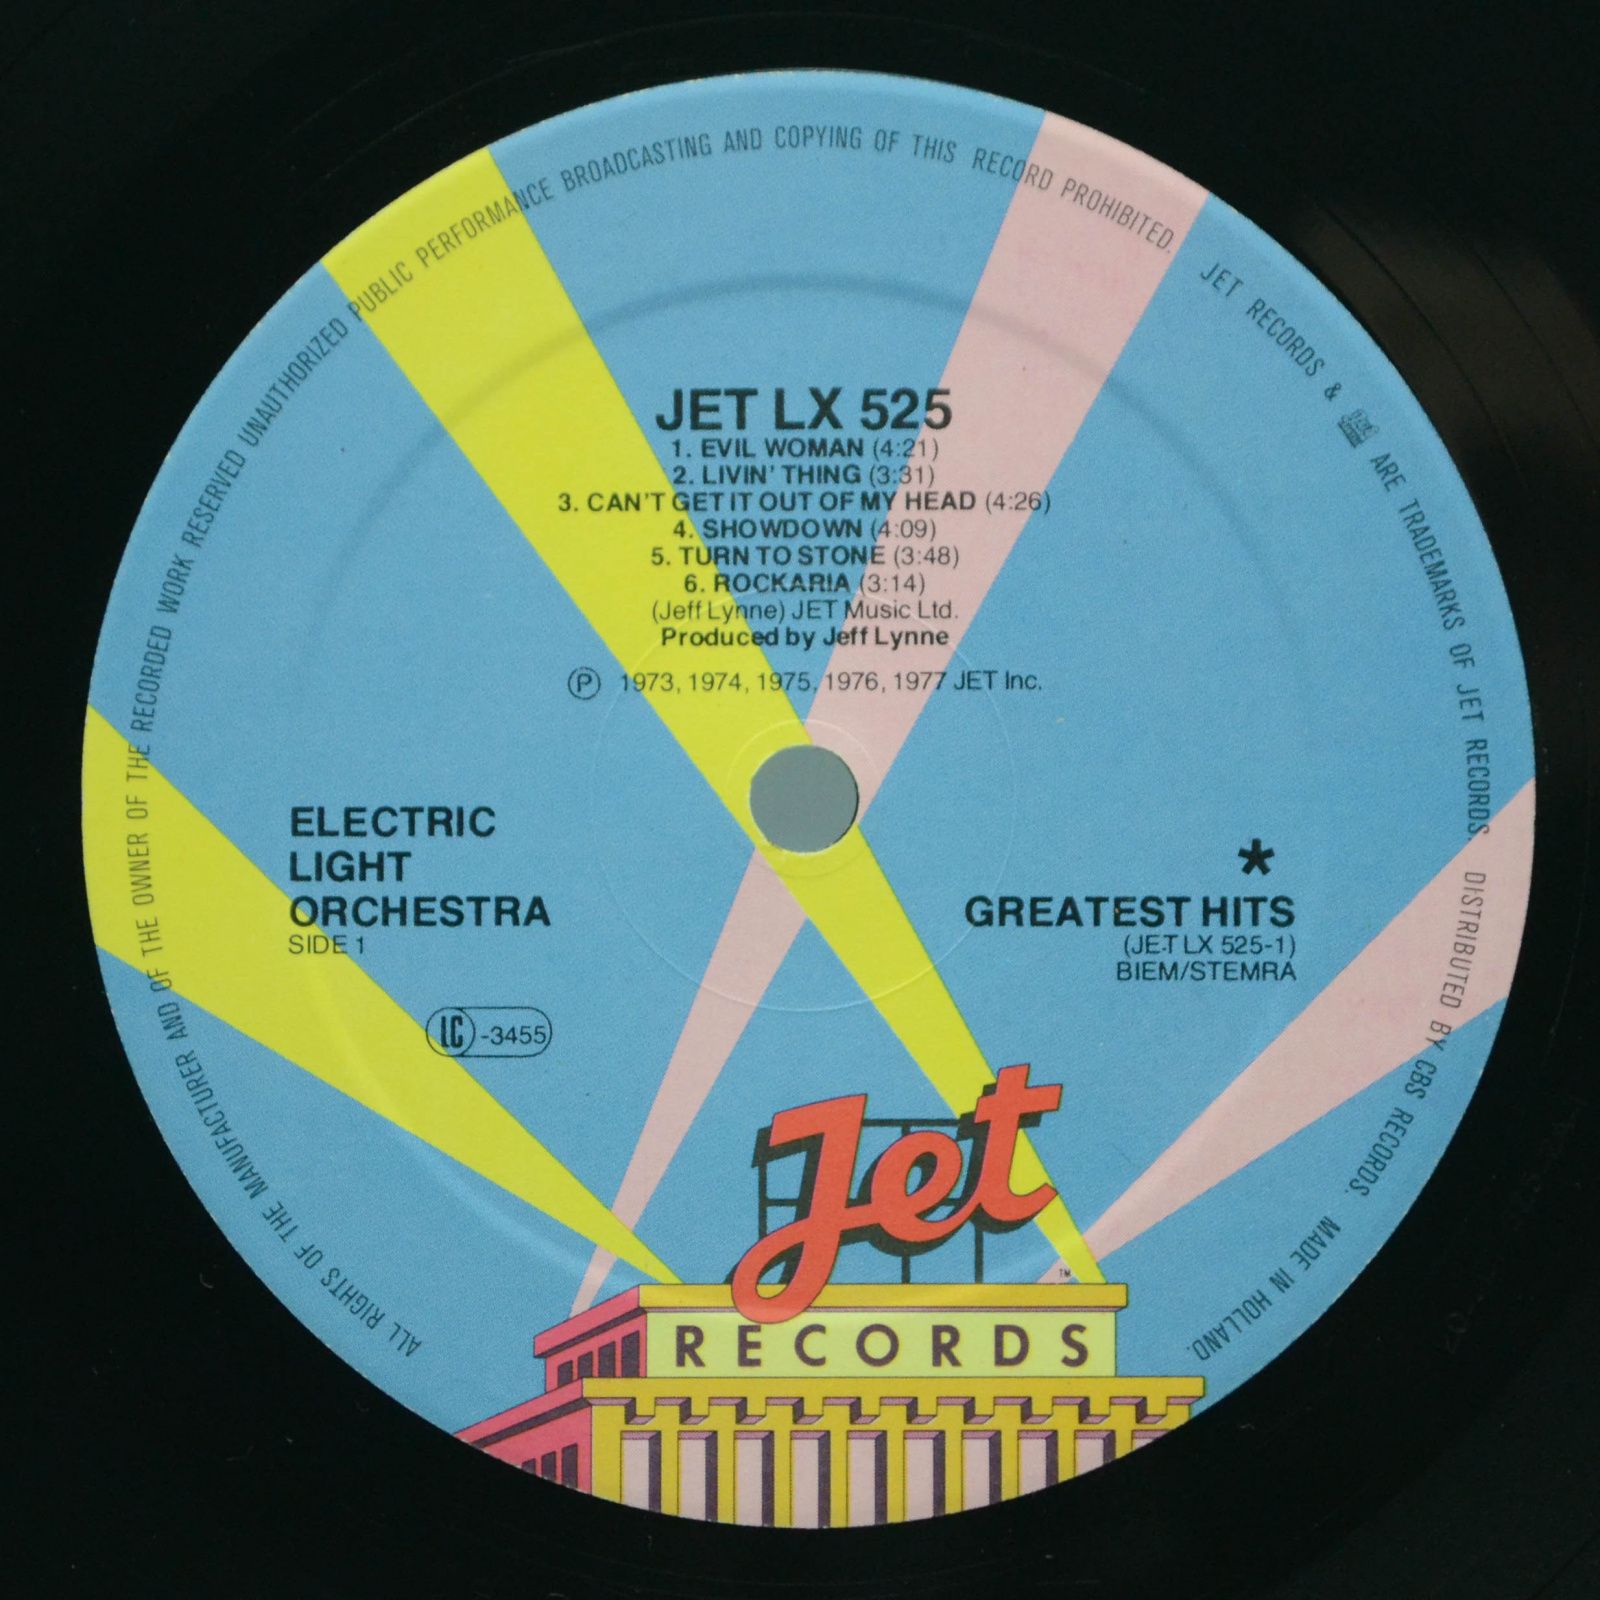 ELO — ELO's Greatest Hits, 1979